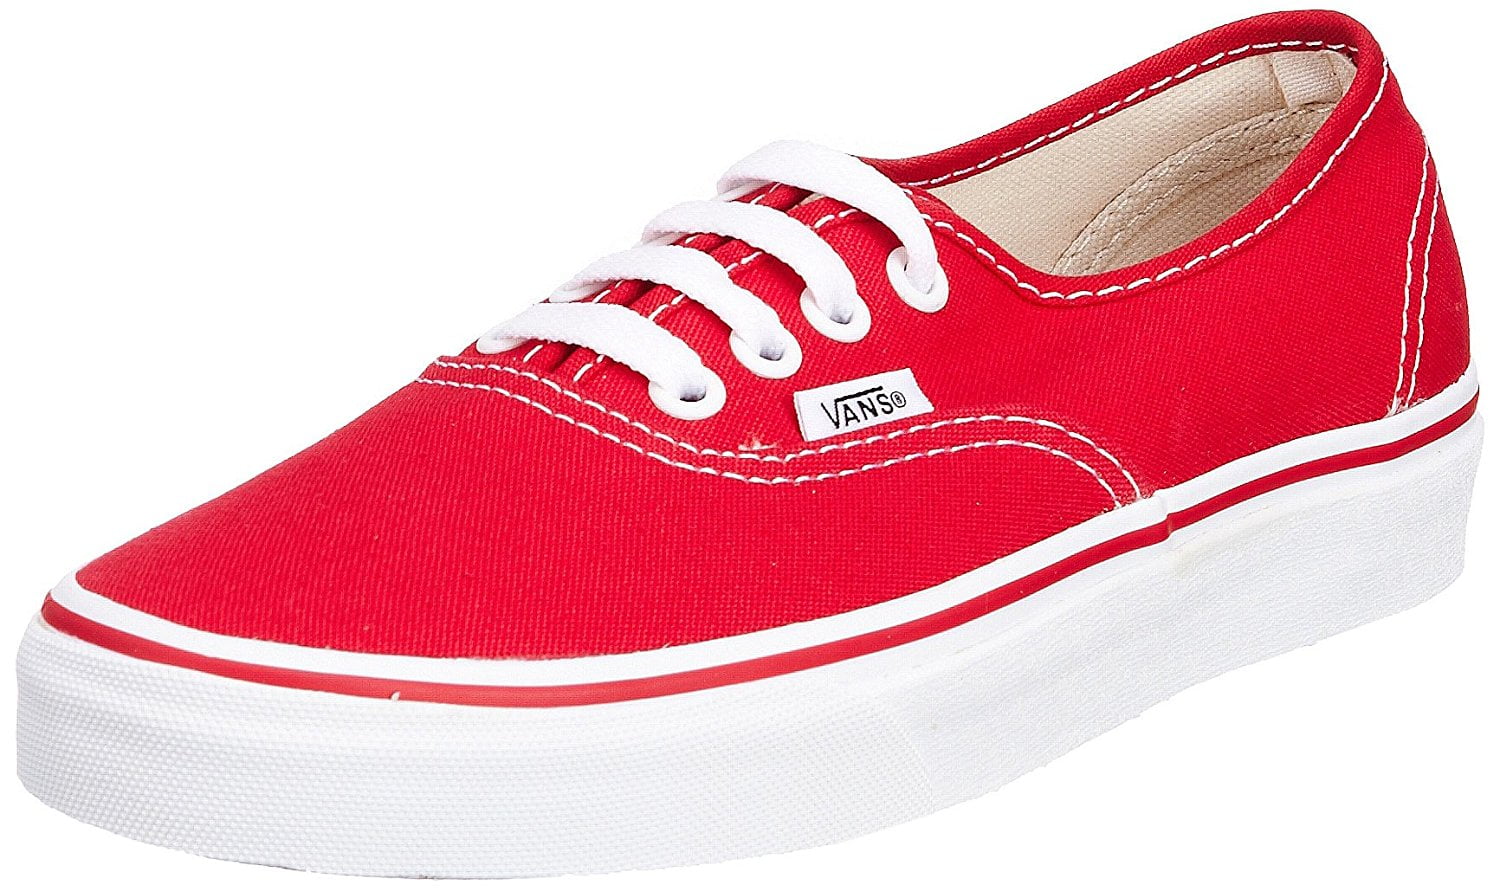 vans red tennis shoes